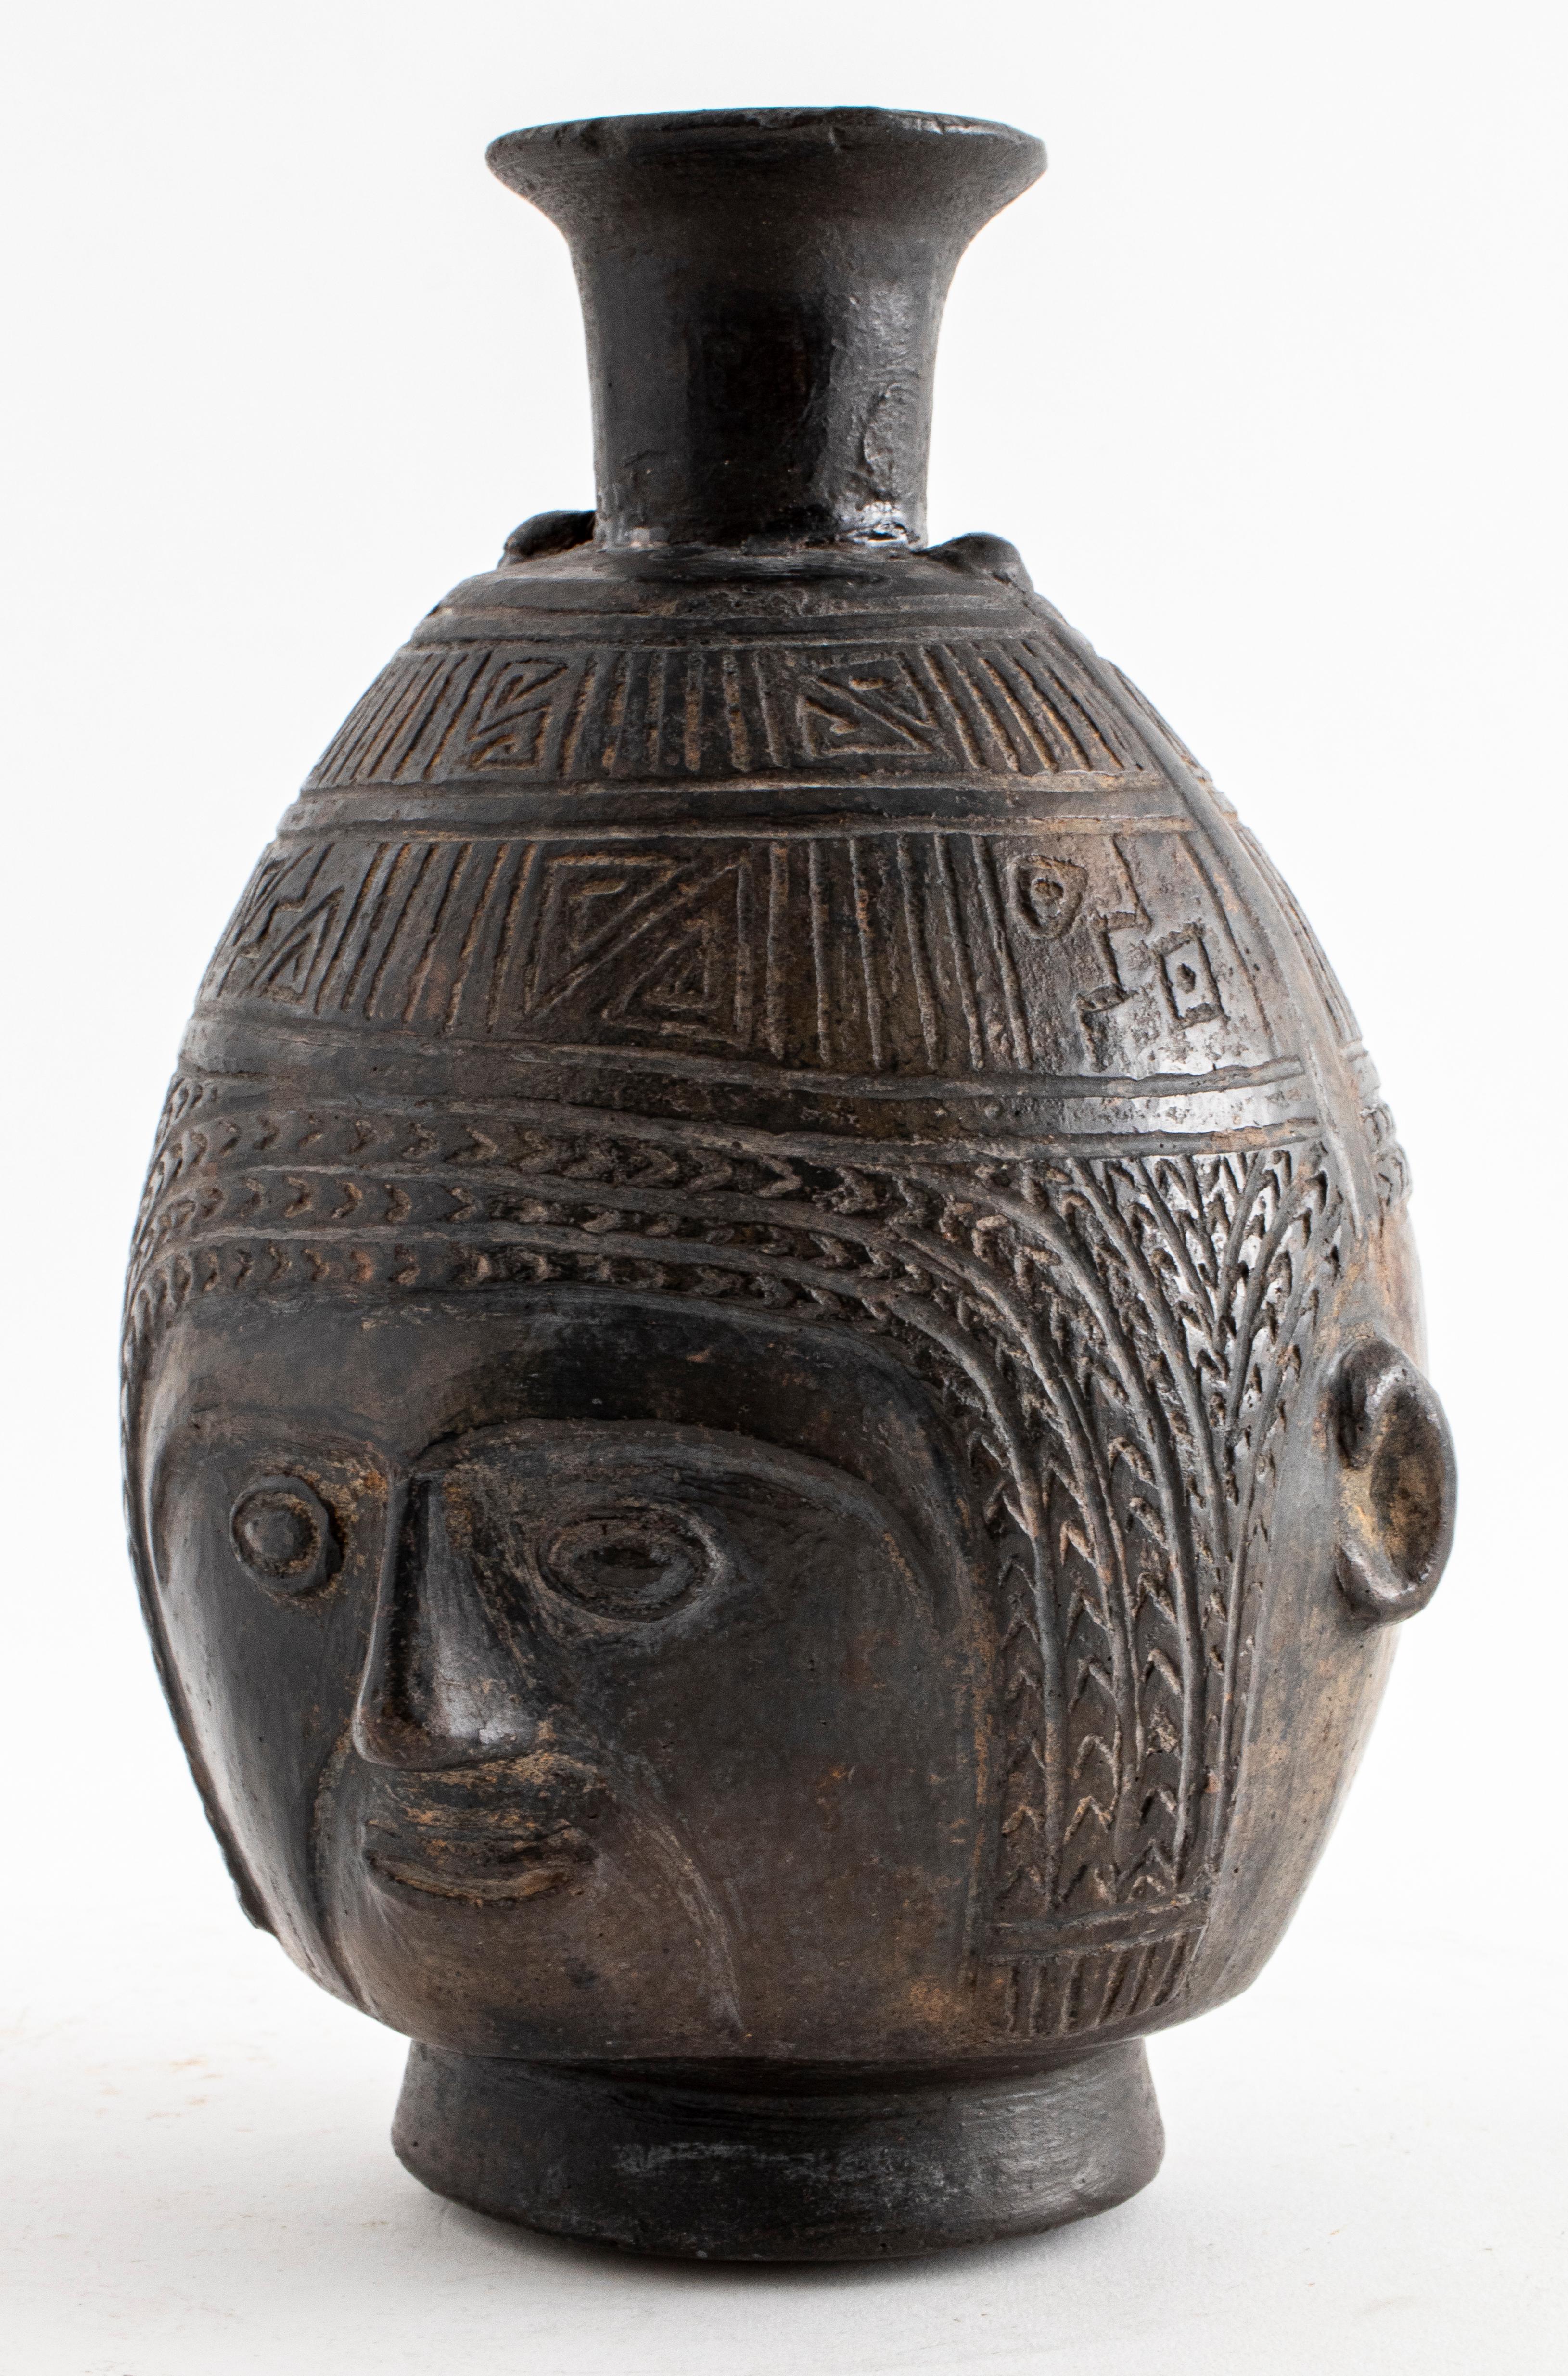 CHIMU-INCA ca 1100 AD Vintage Black Terra-cotta Reproduction Pre-Columbian Blackware Pottery Vessel Peru Inca Vase with Handle